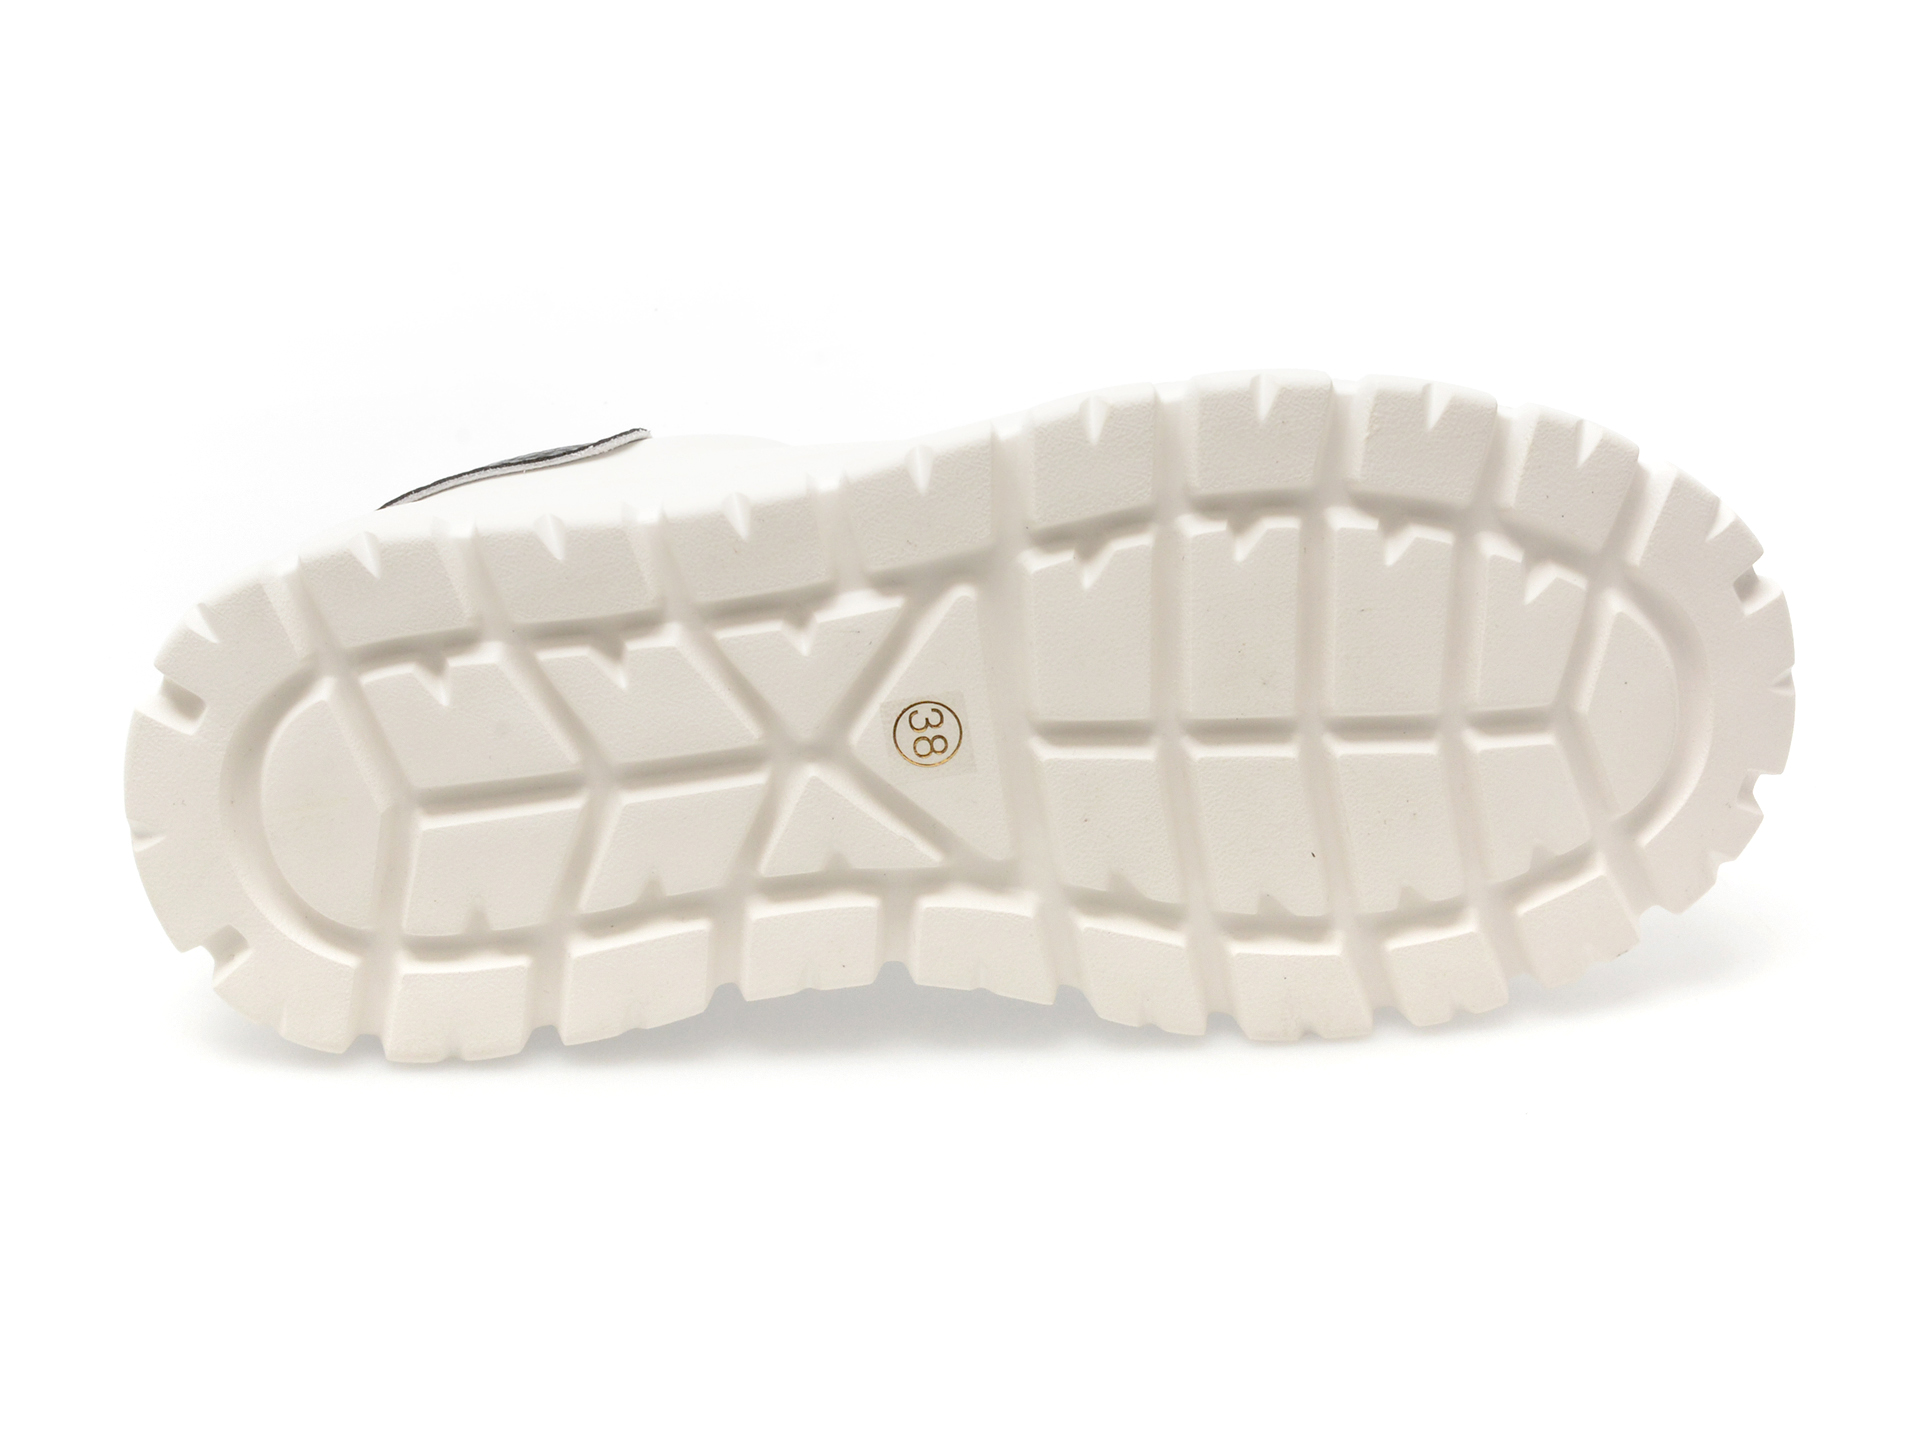 Pantofi GRYXX albi, A9227, din piele naturala